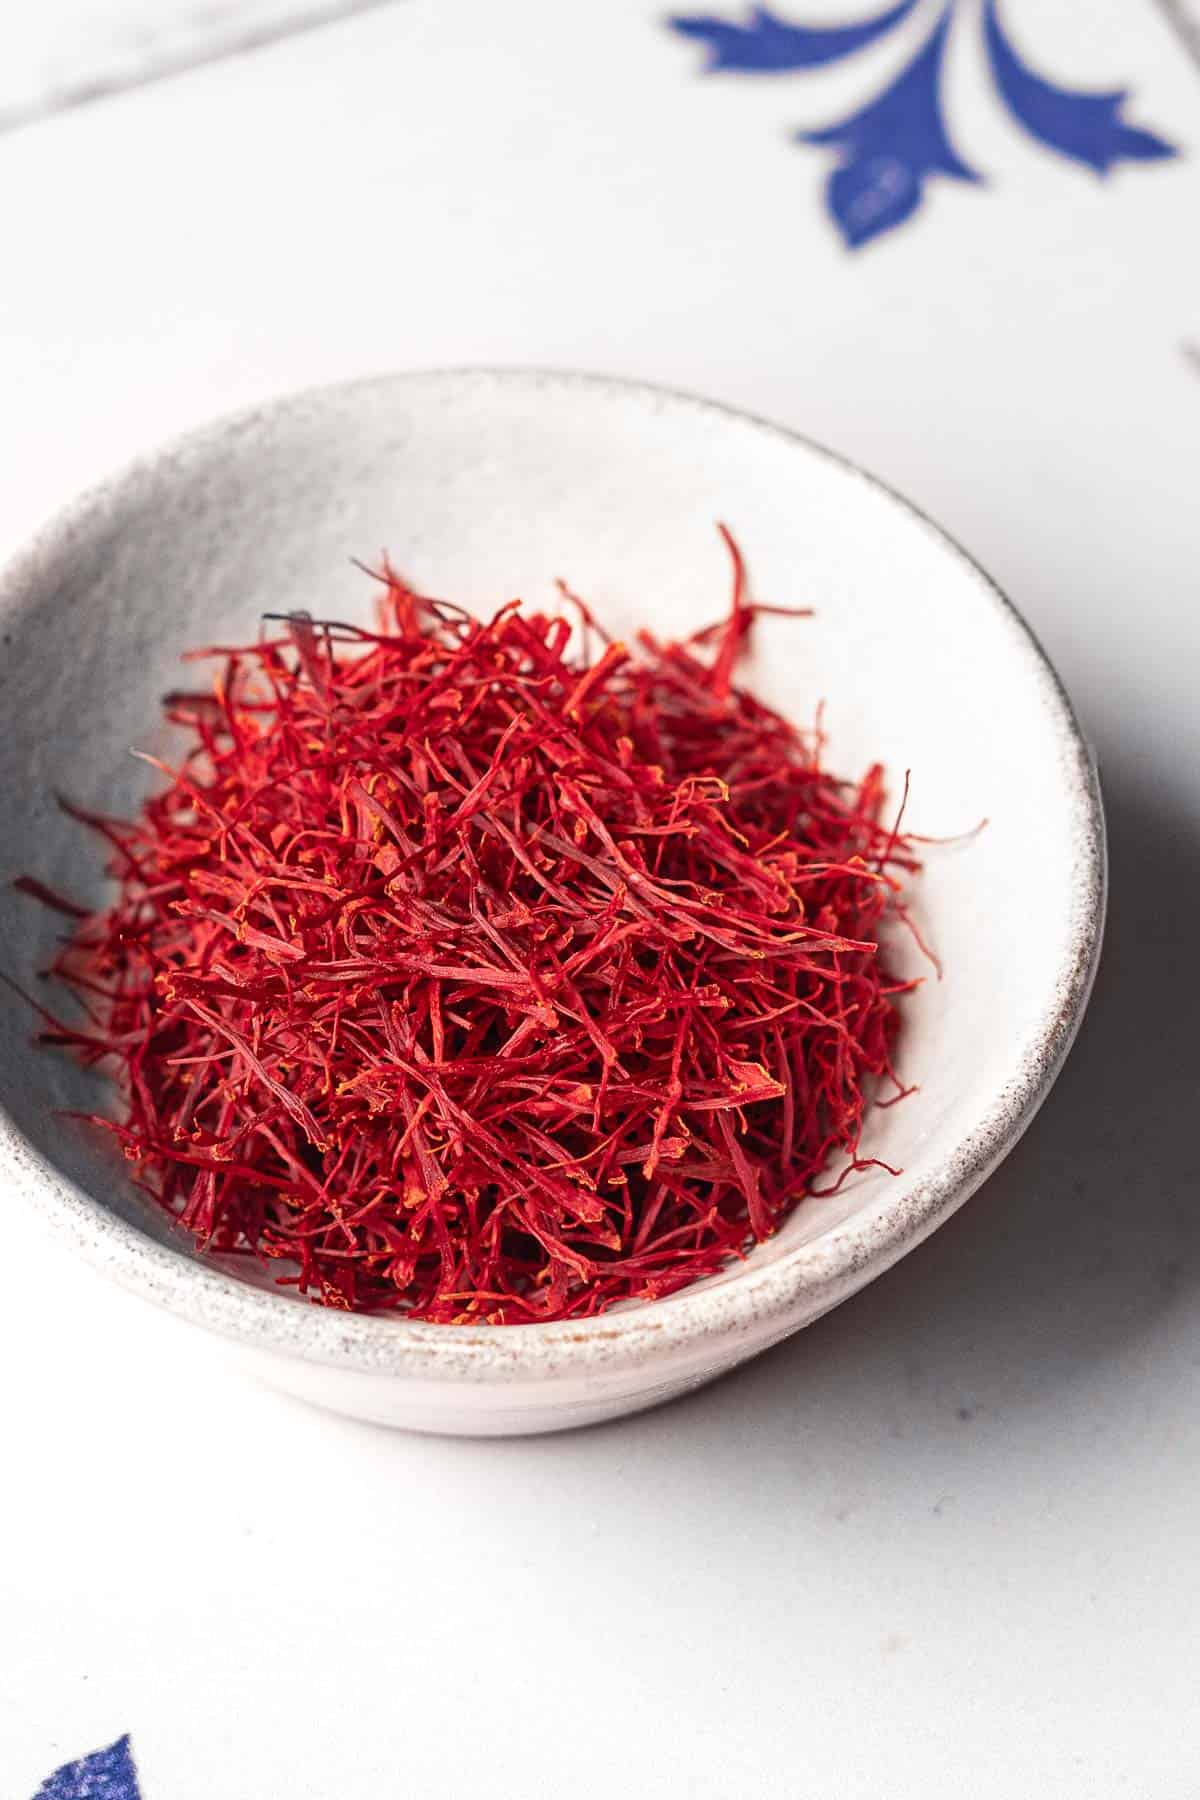 saffron threads in a bowl.